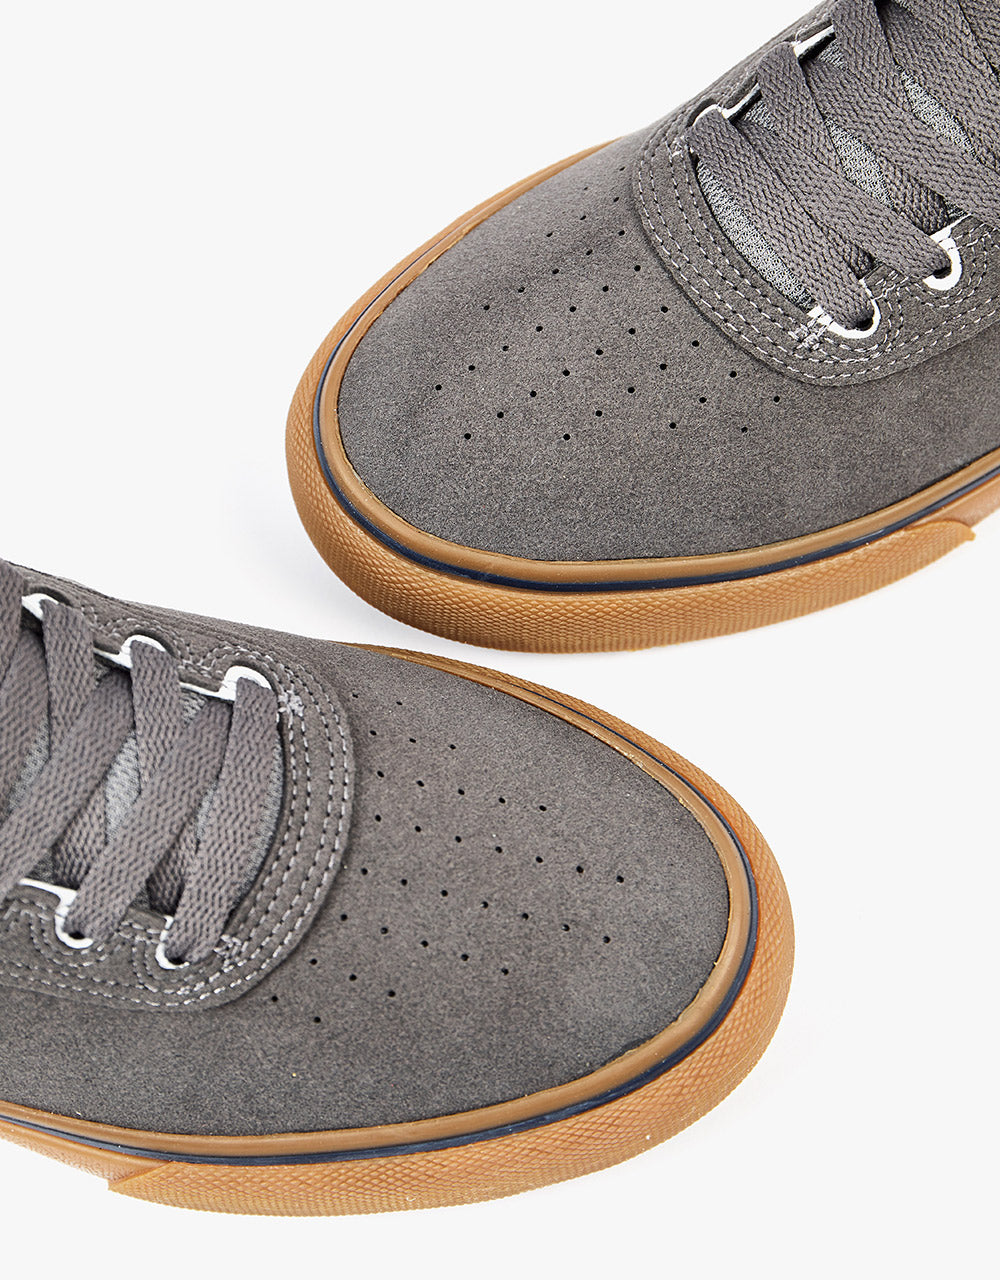 Etnies Joslin Vulc Skate Shoes - Grey/Gum